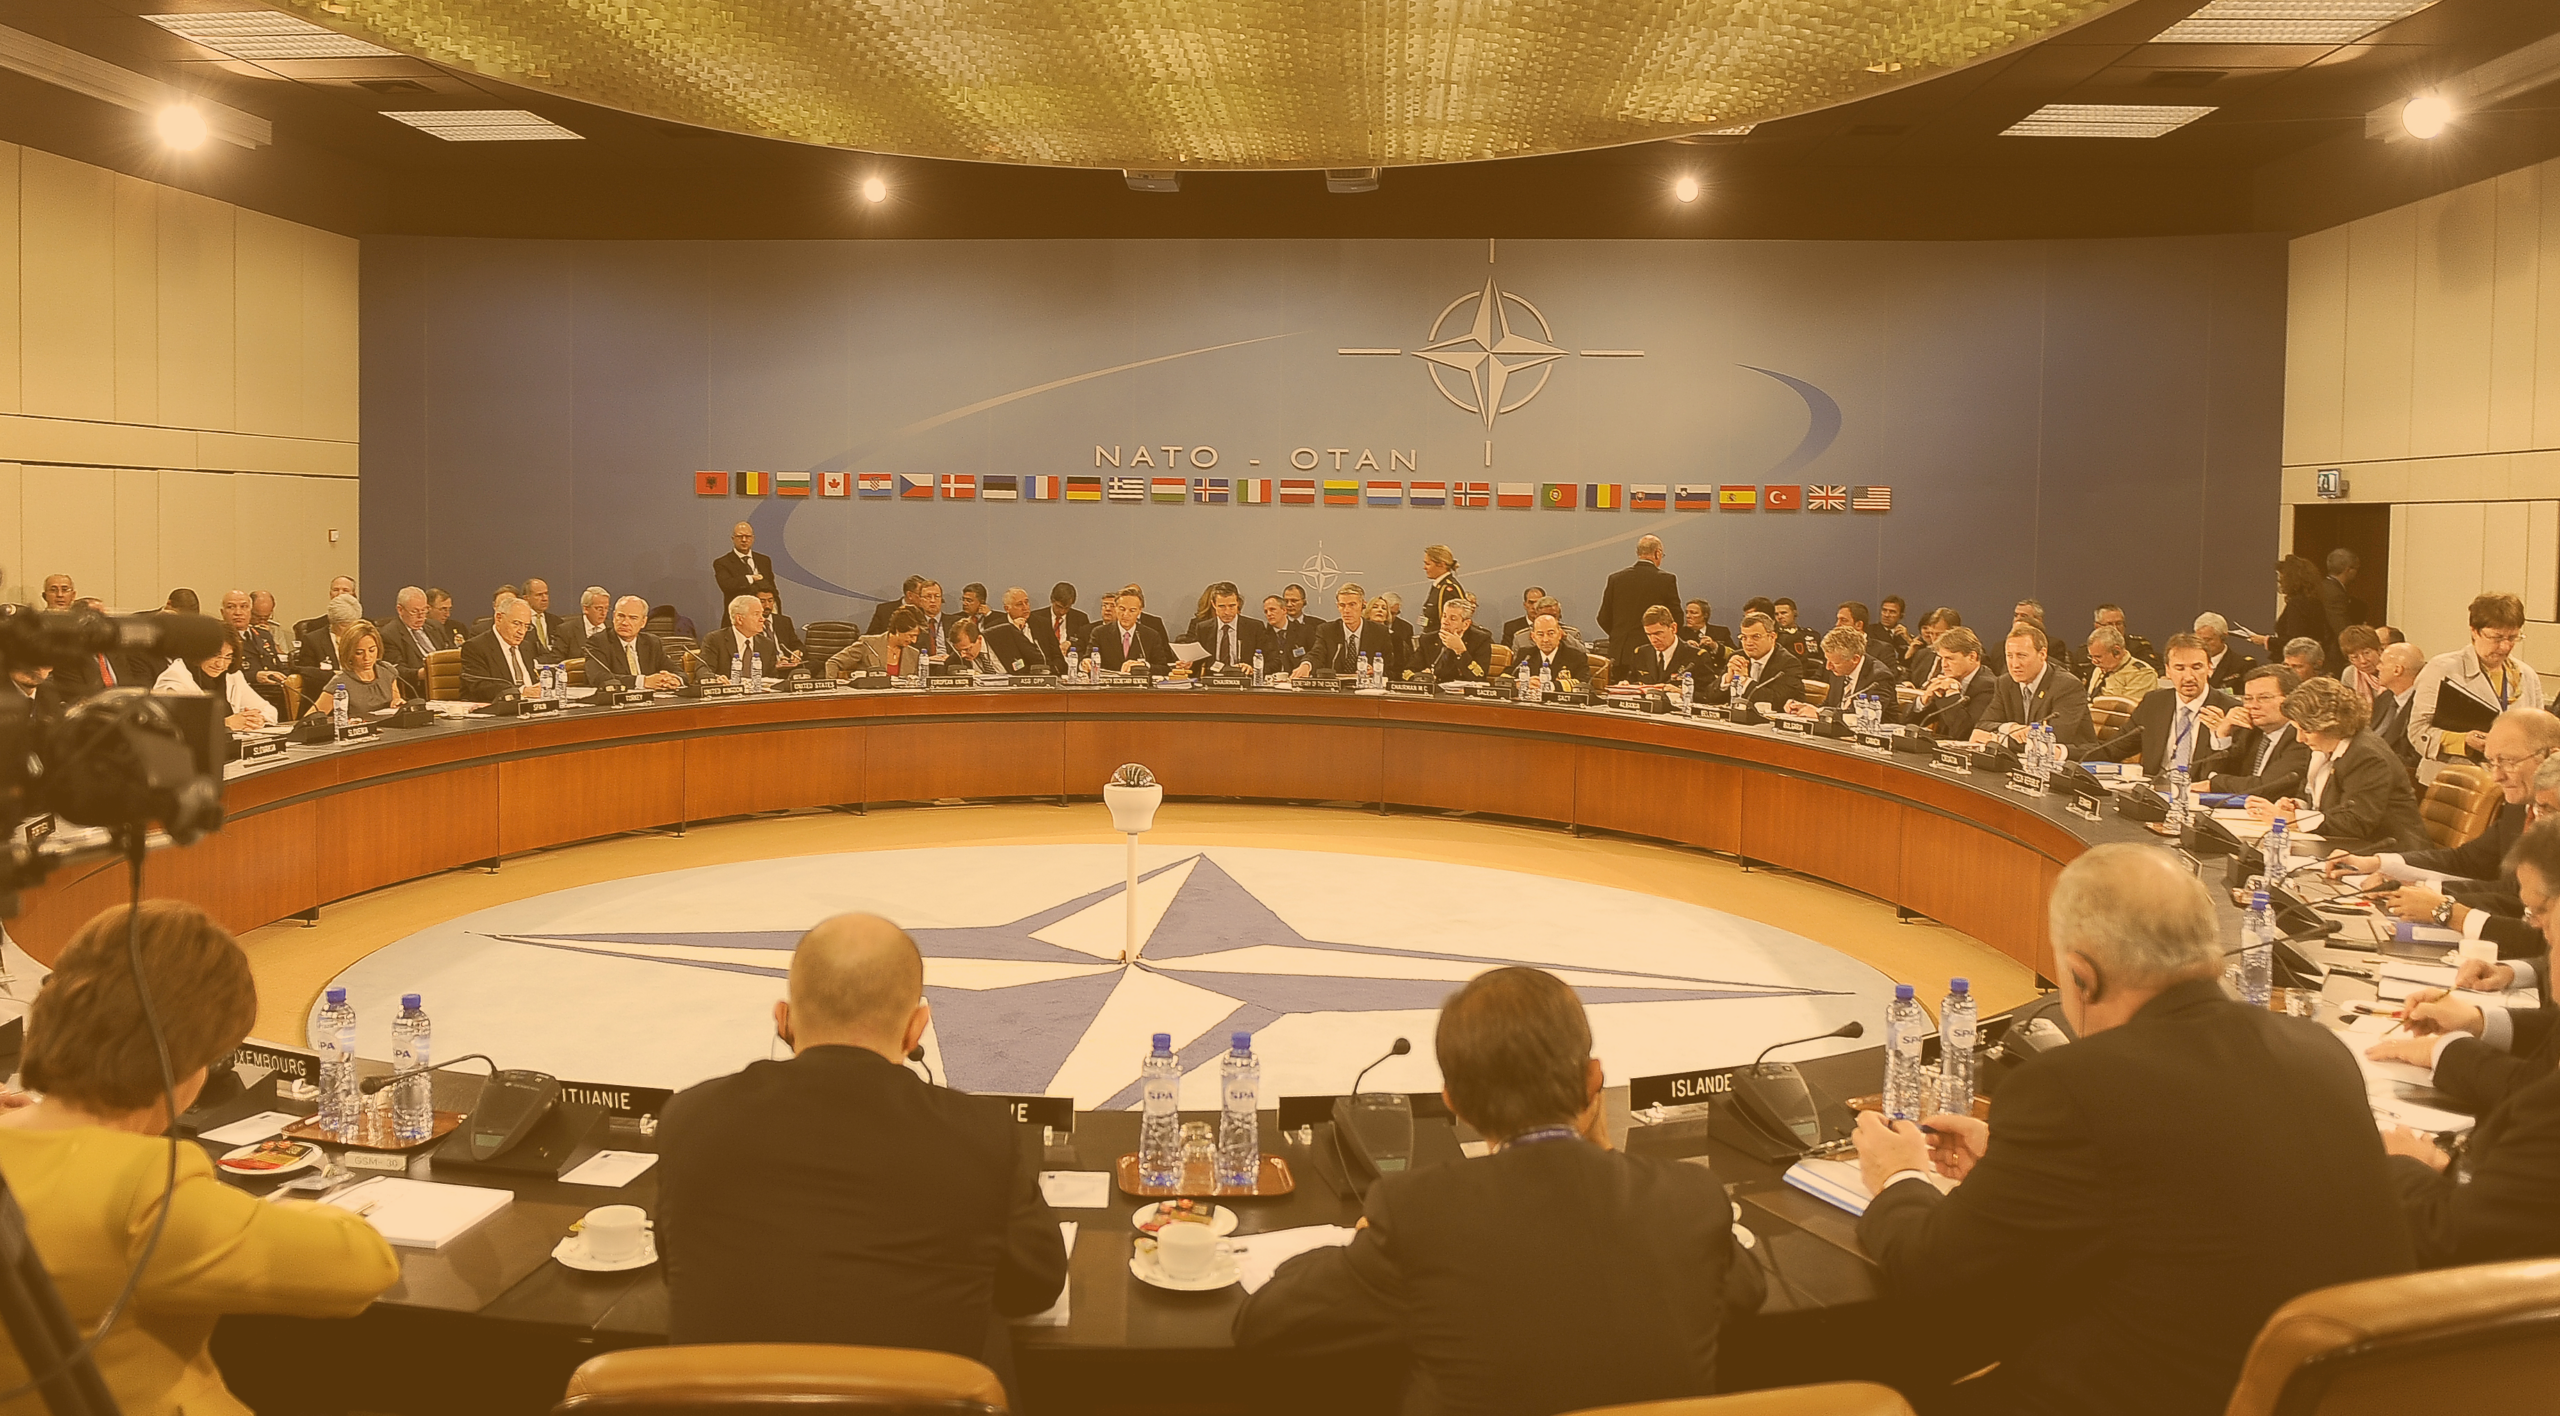 Ruud van Dijk and Stanley R. Sloan – NATO’s inherent dilemma: strategic imperatives vs. value foundations